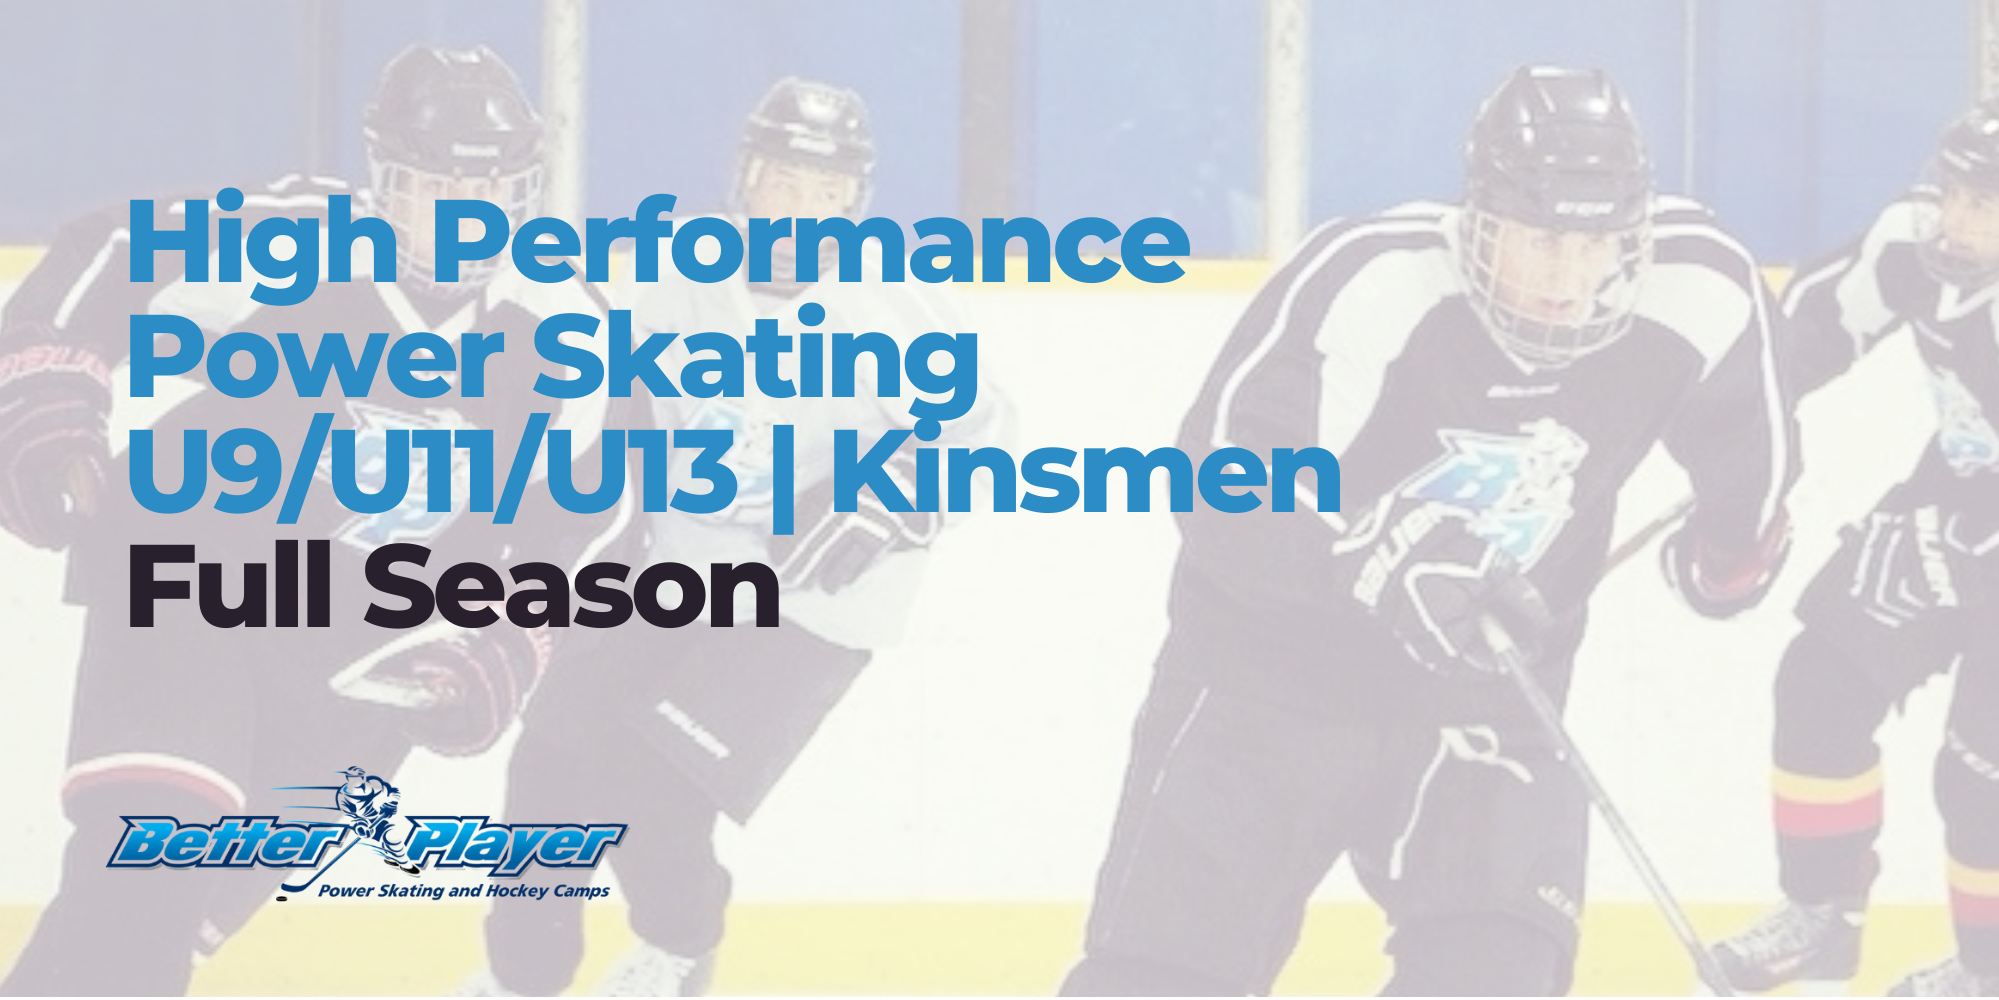 Full Season U11/U13 | High Performance Power Skating Kinsmen